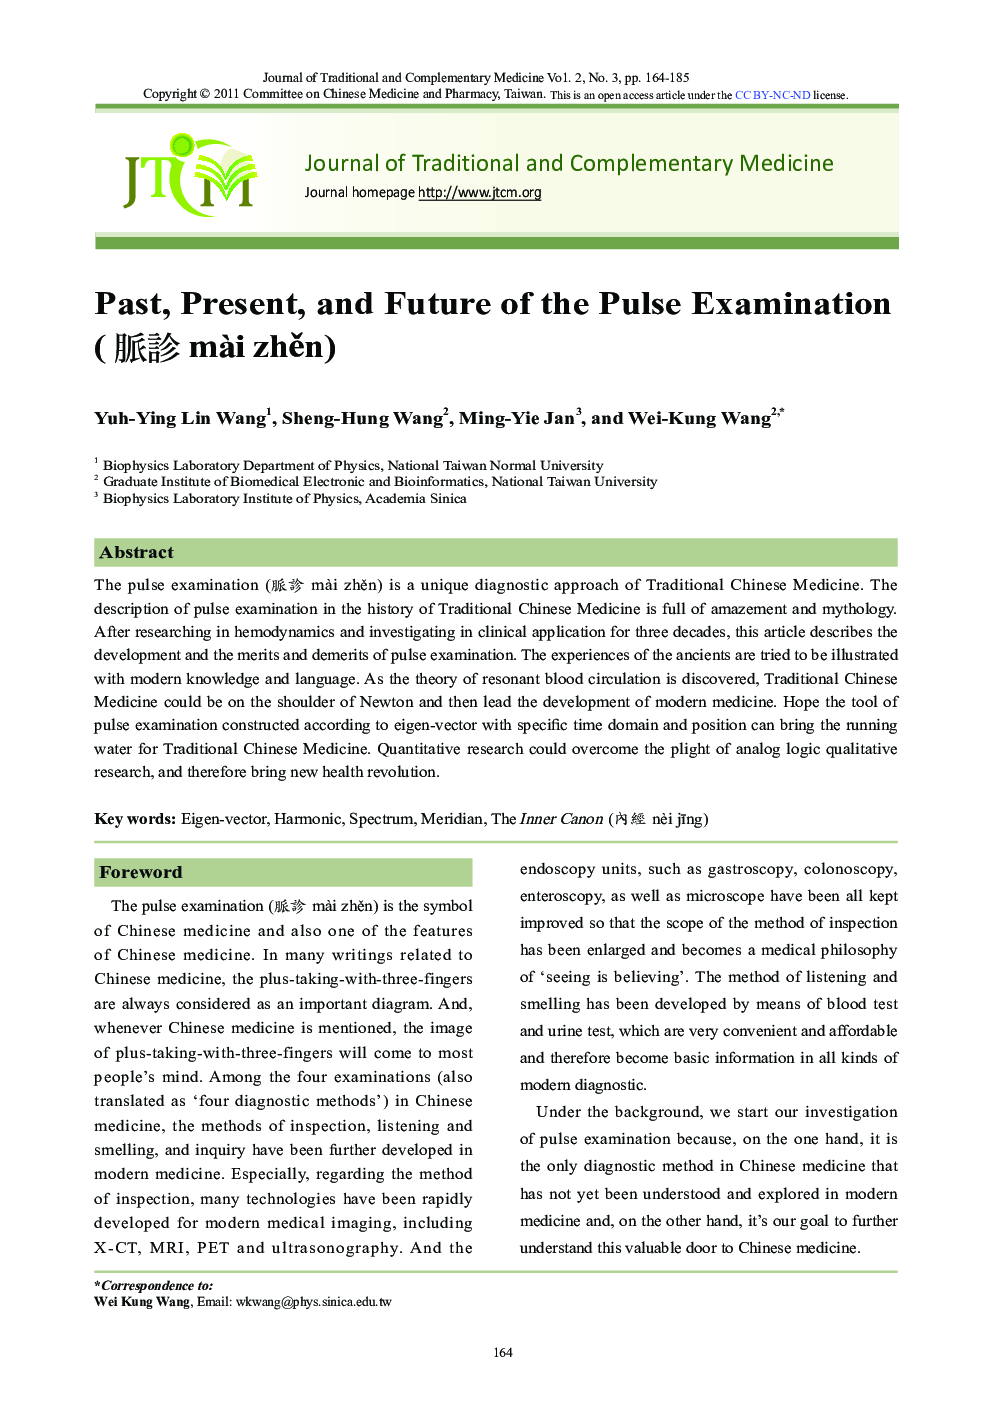 Past, Present, and Future of the Pulse Examination (脈診 mài zhěn)